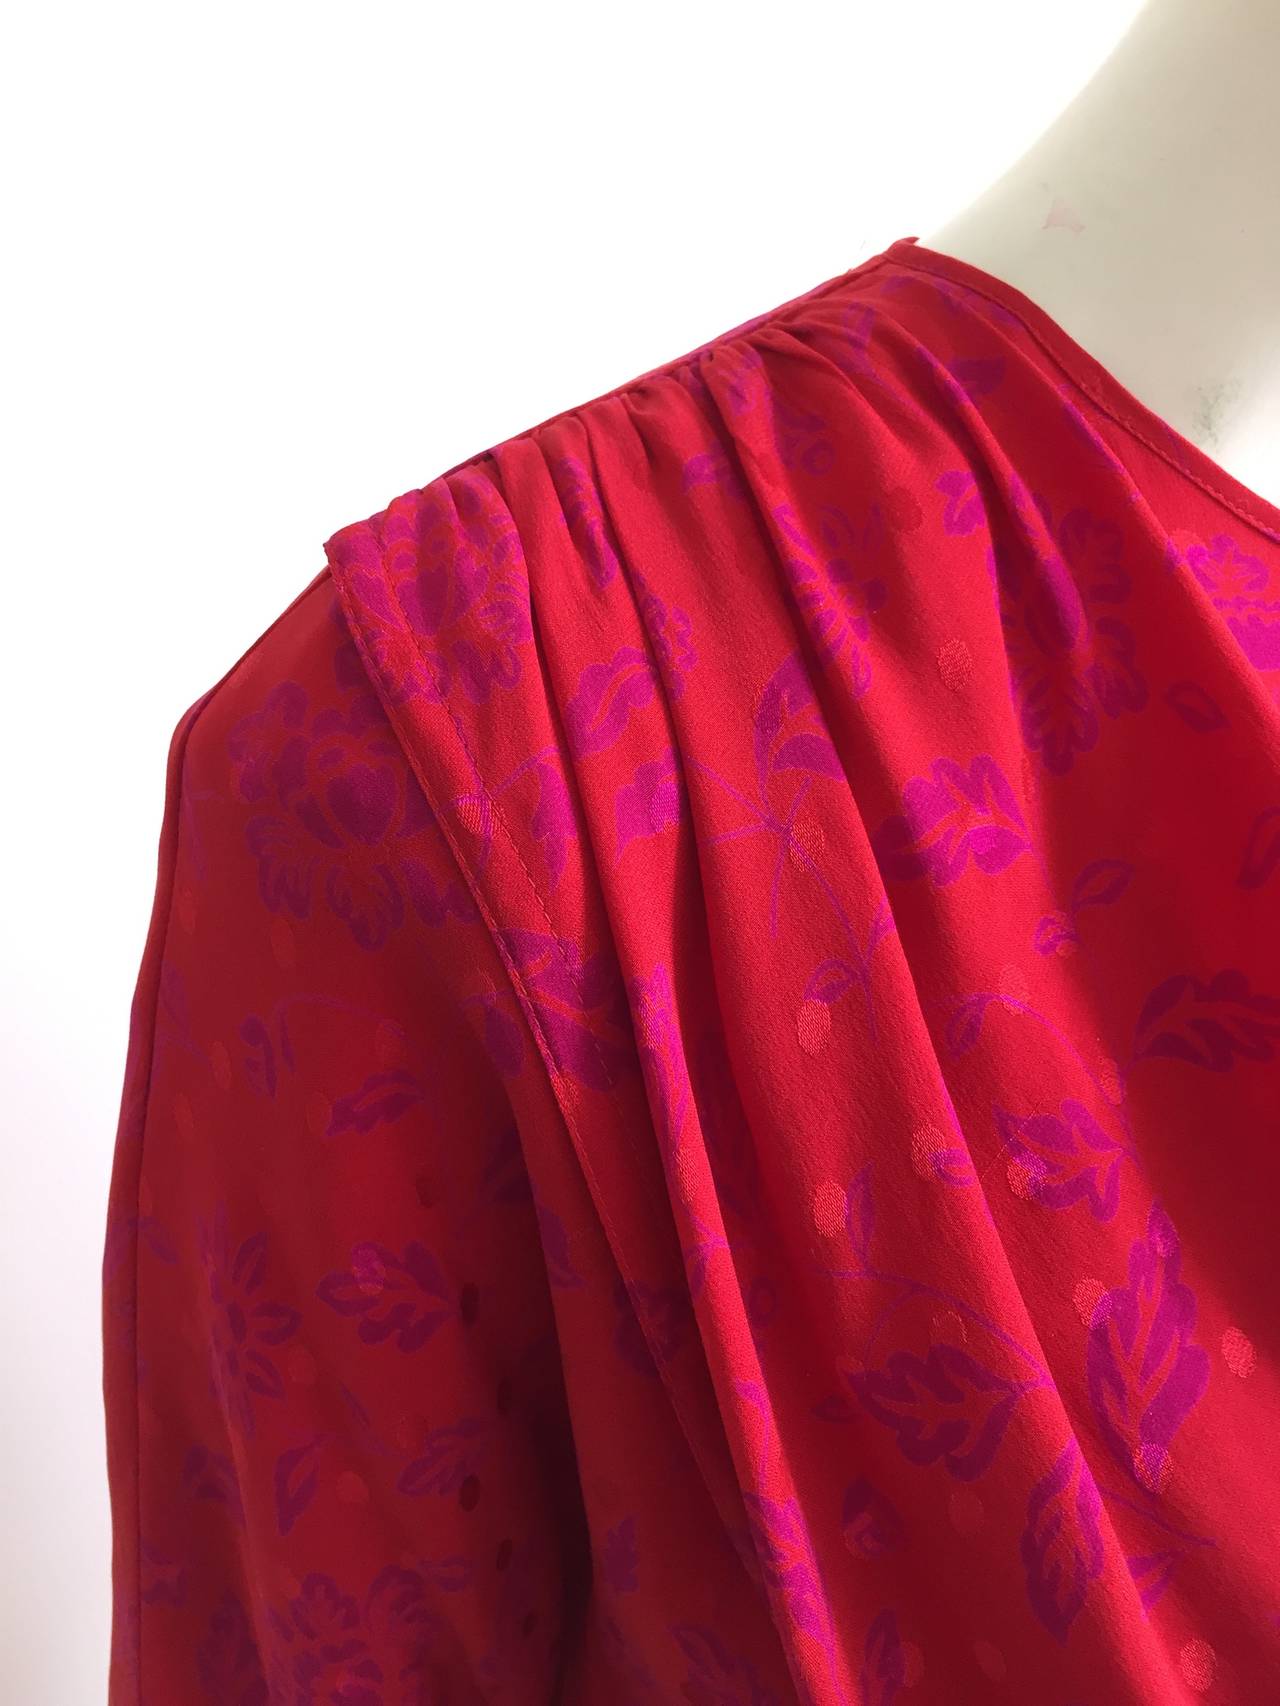 Women's Guy Laroche Silk Dress With Pockets, 1970s For Sale